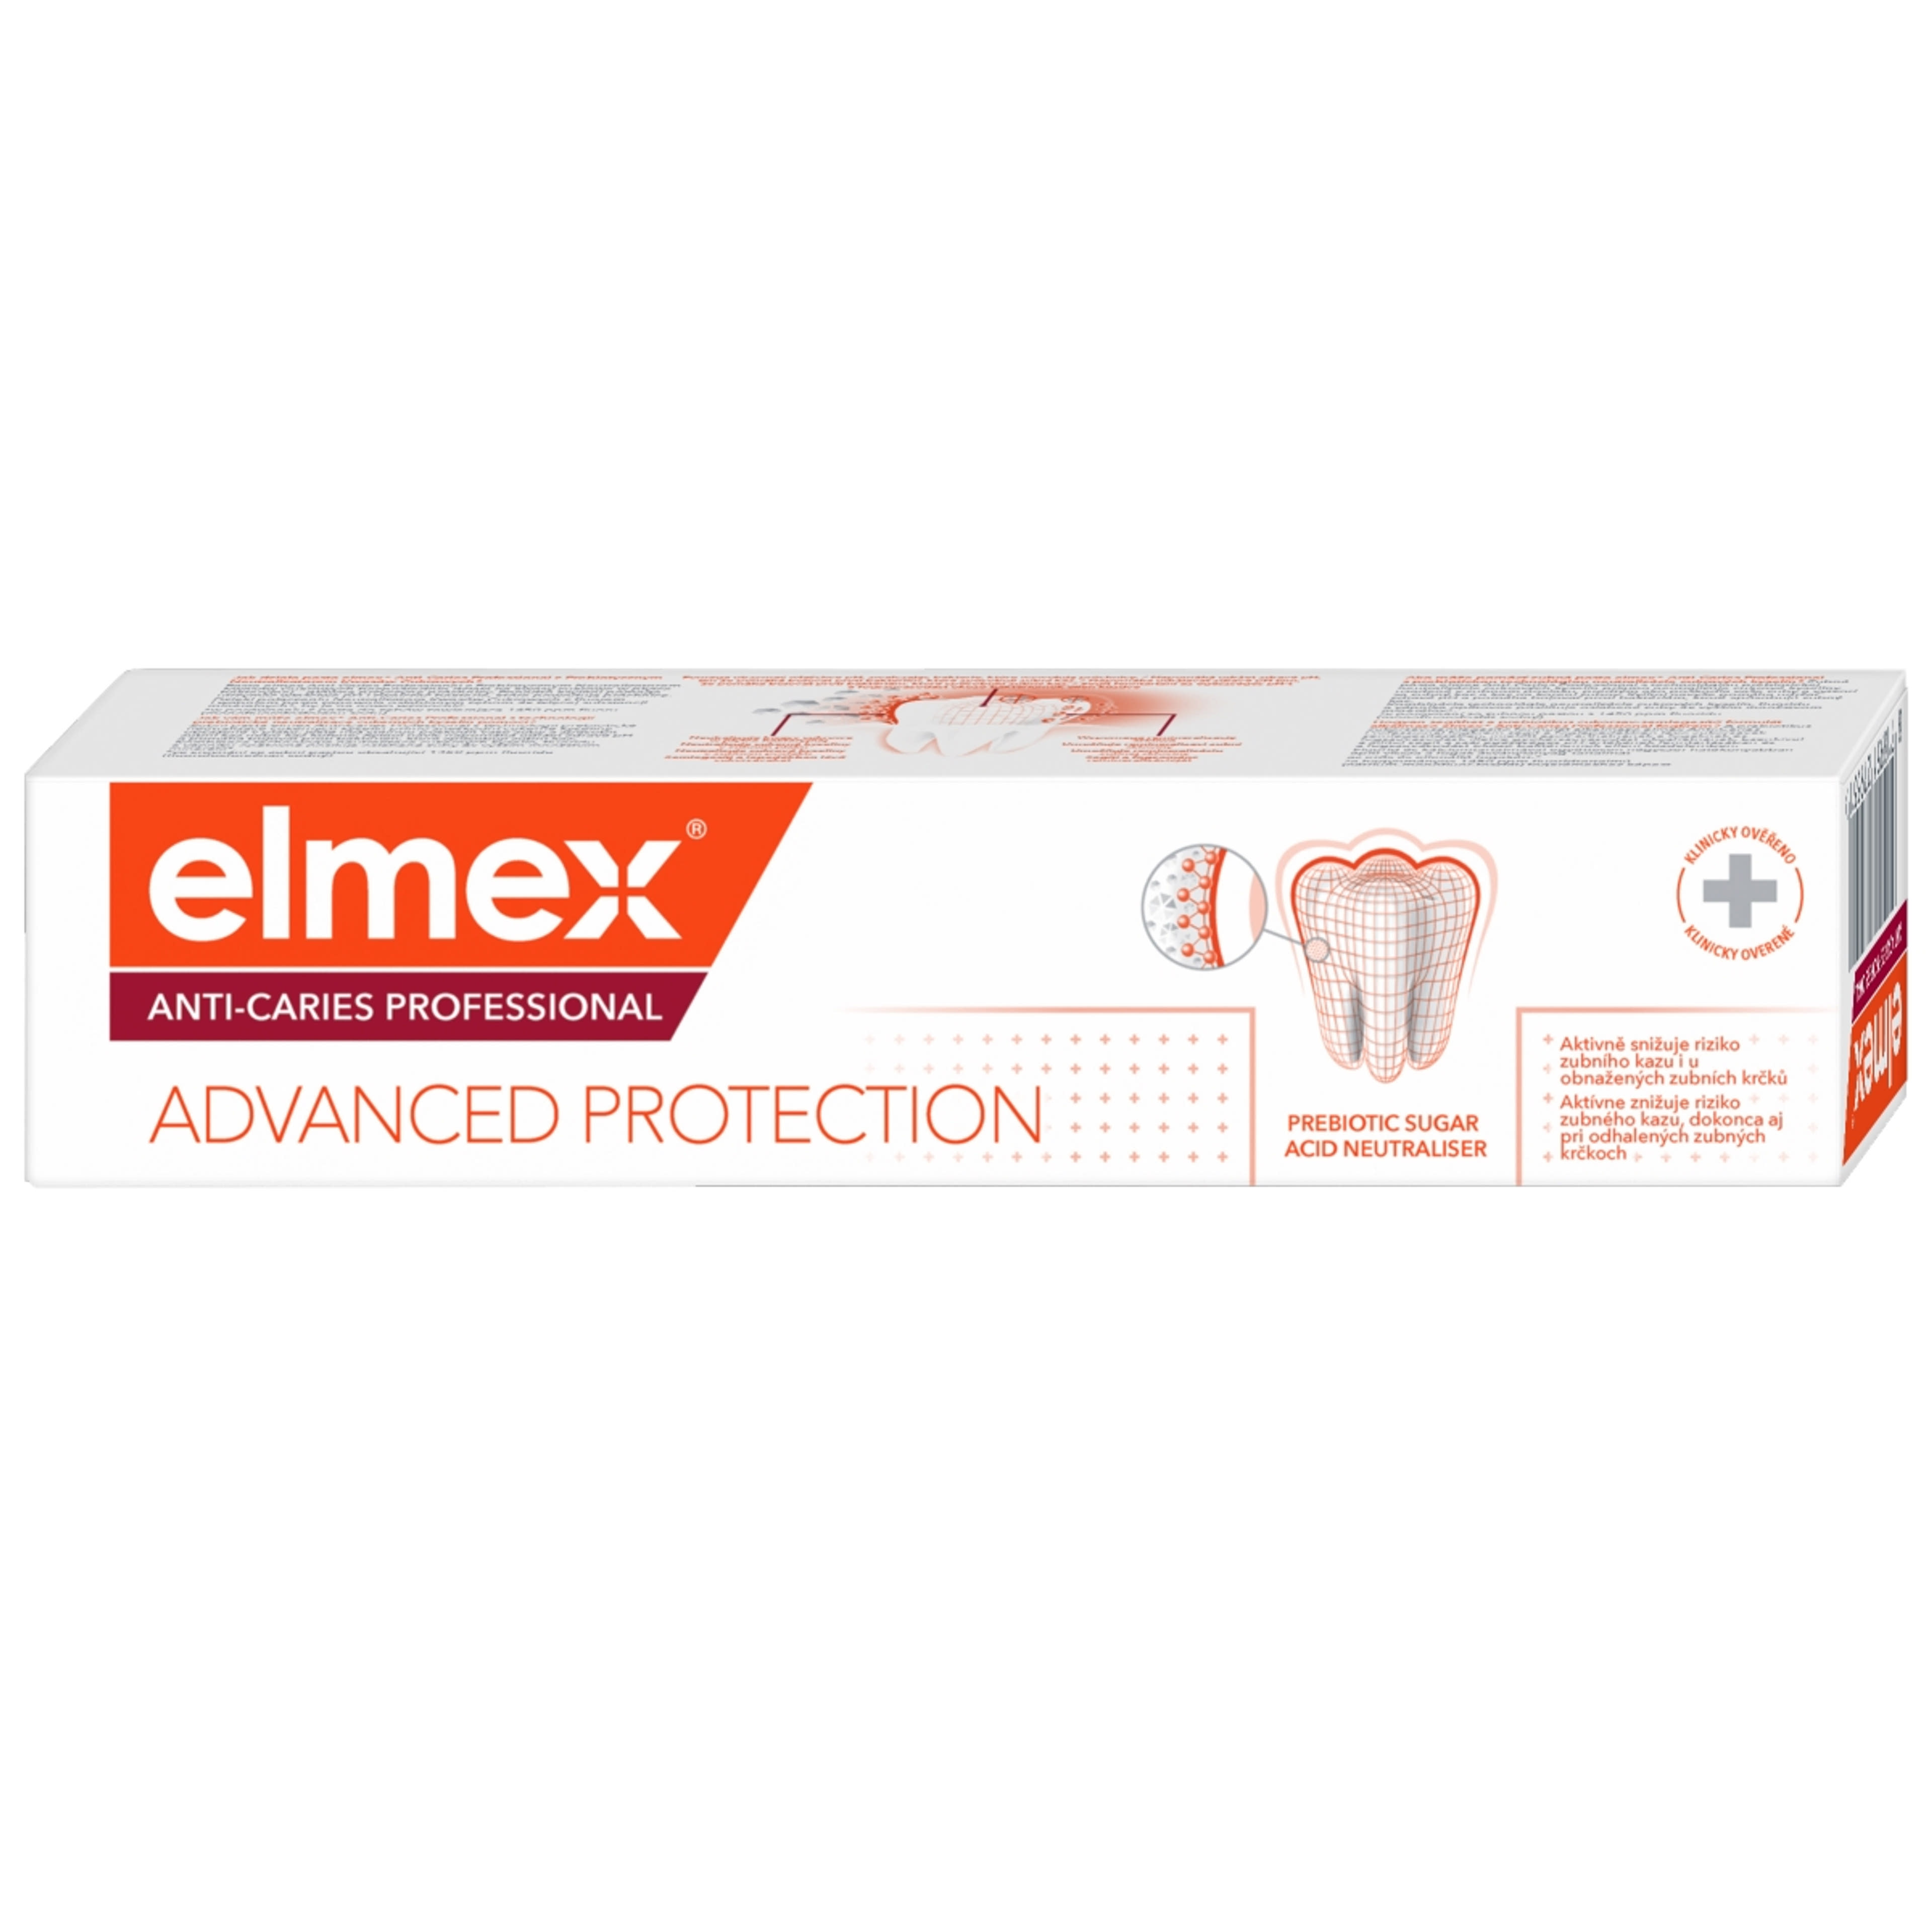 Elmex Anti-Caries Protection Professional fogkrém fogkrém - 75 ml-10